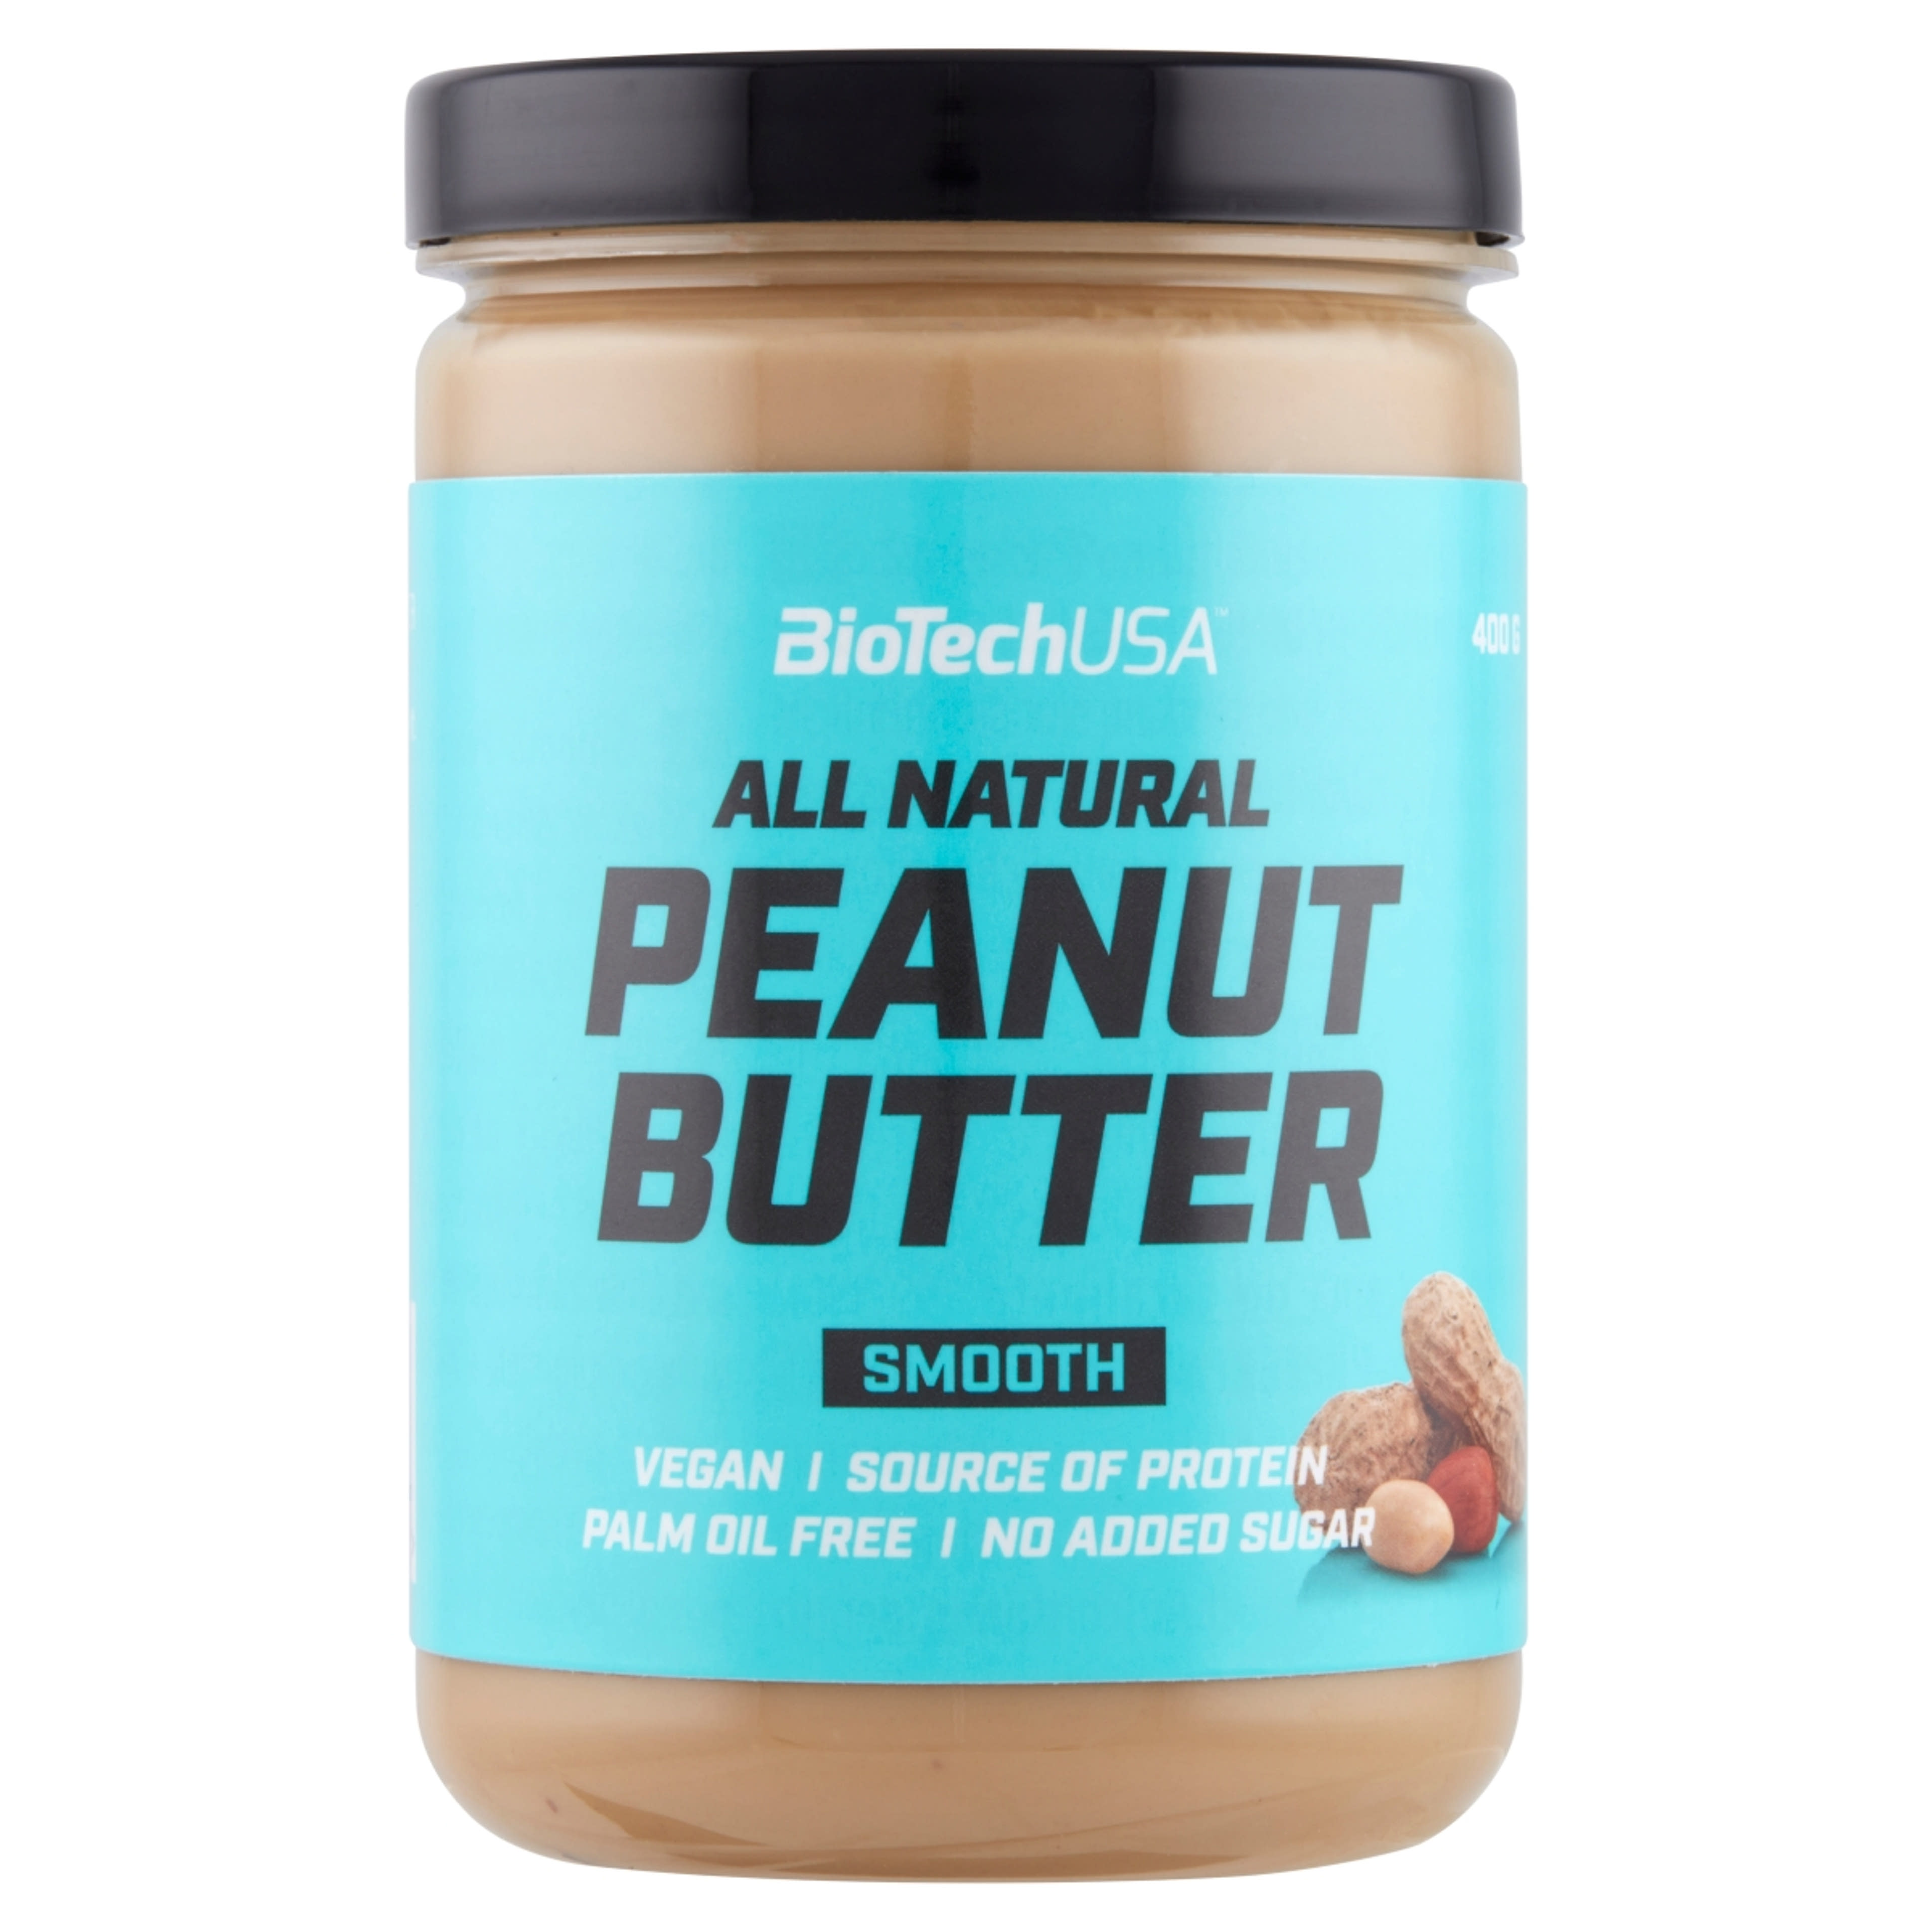 BioTechUSA Peanut Butter smooth - 400 g